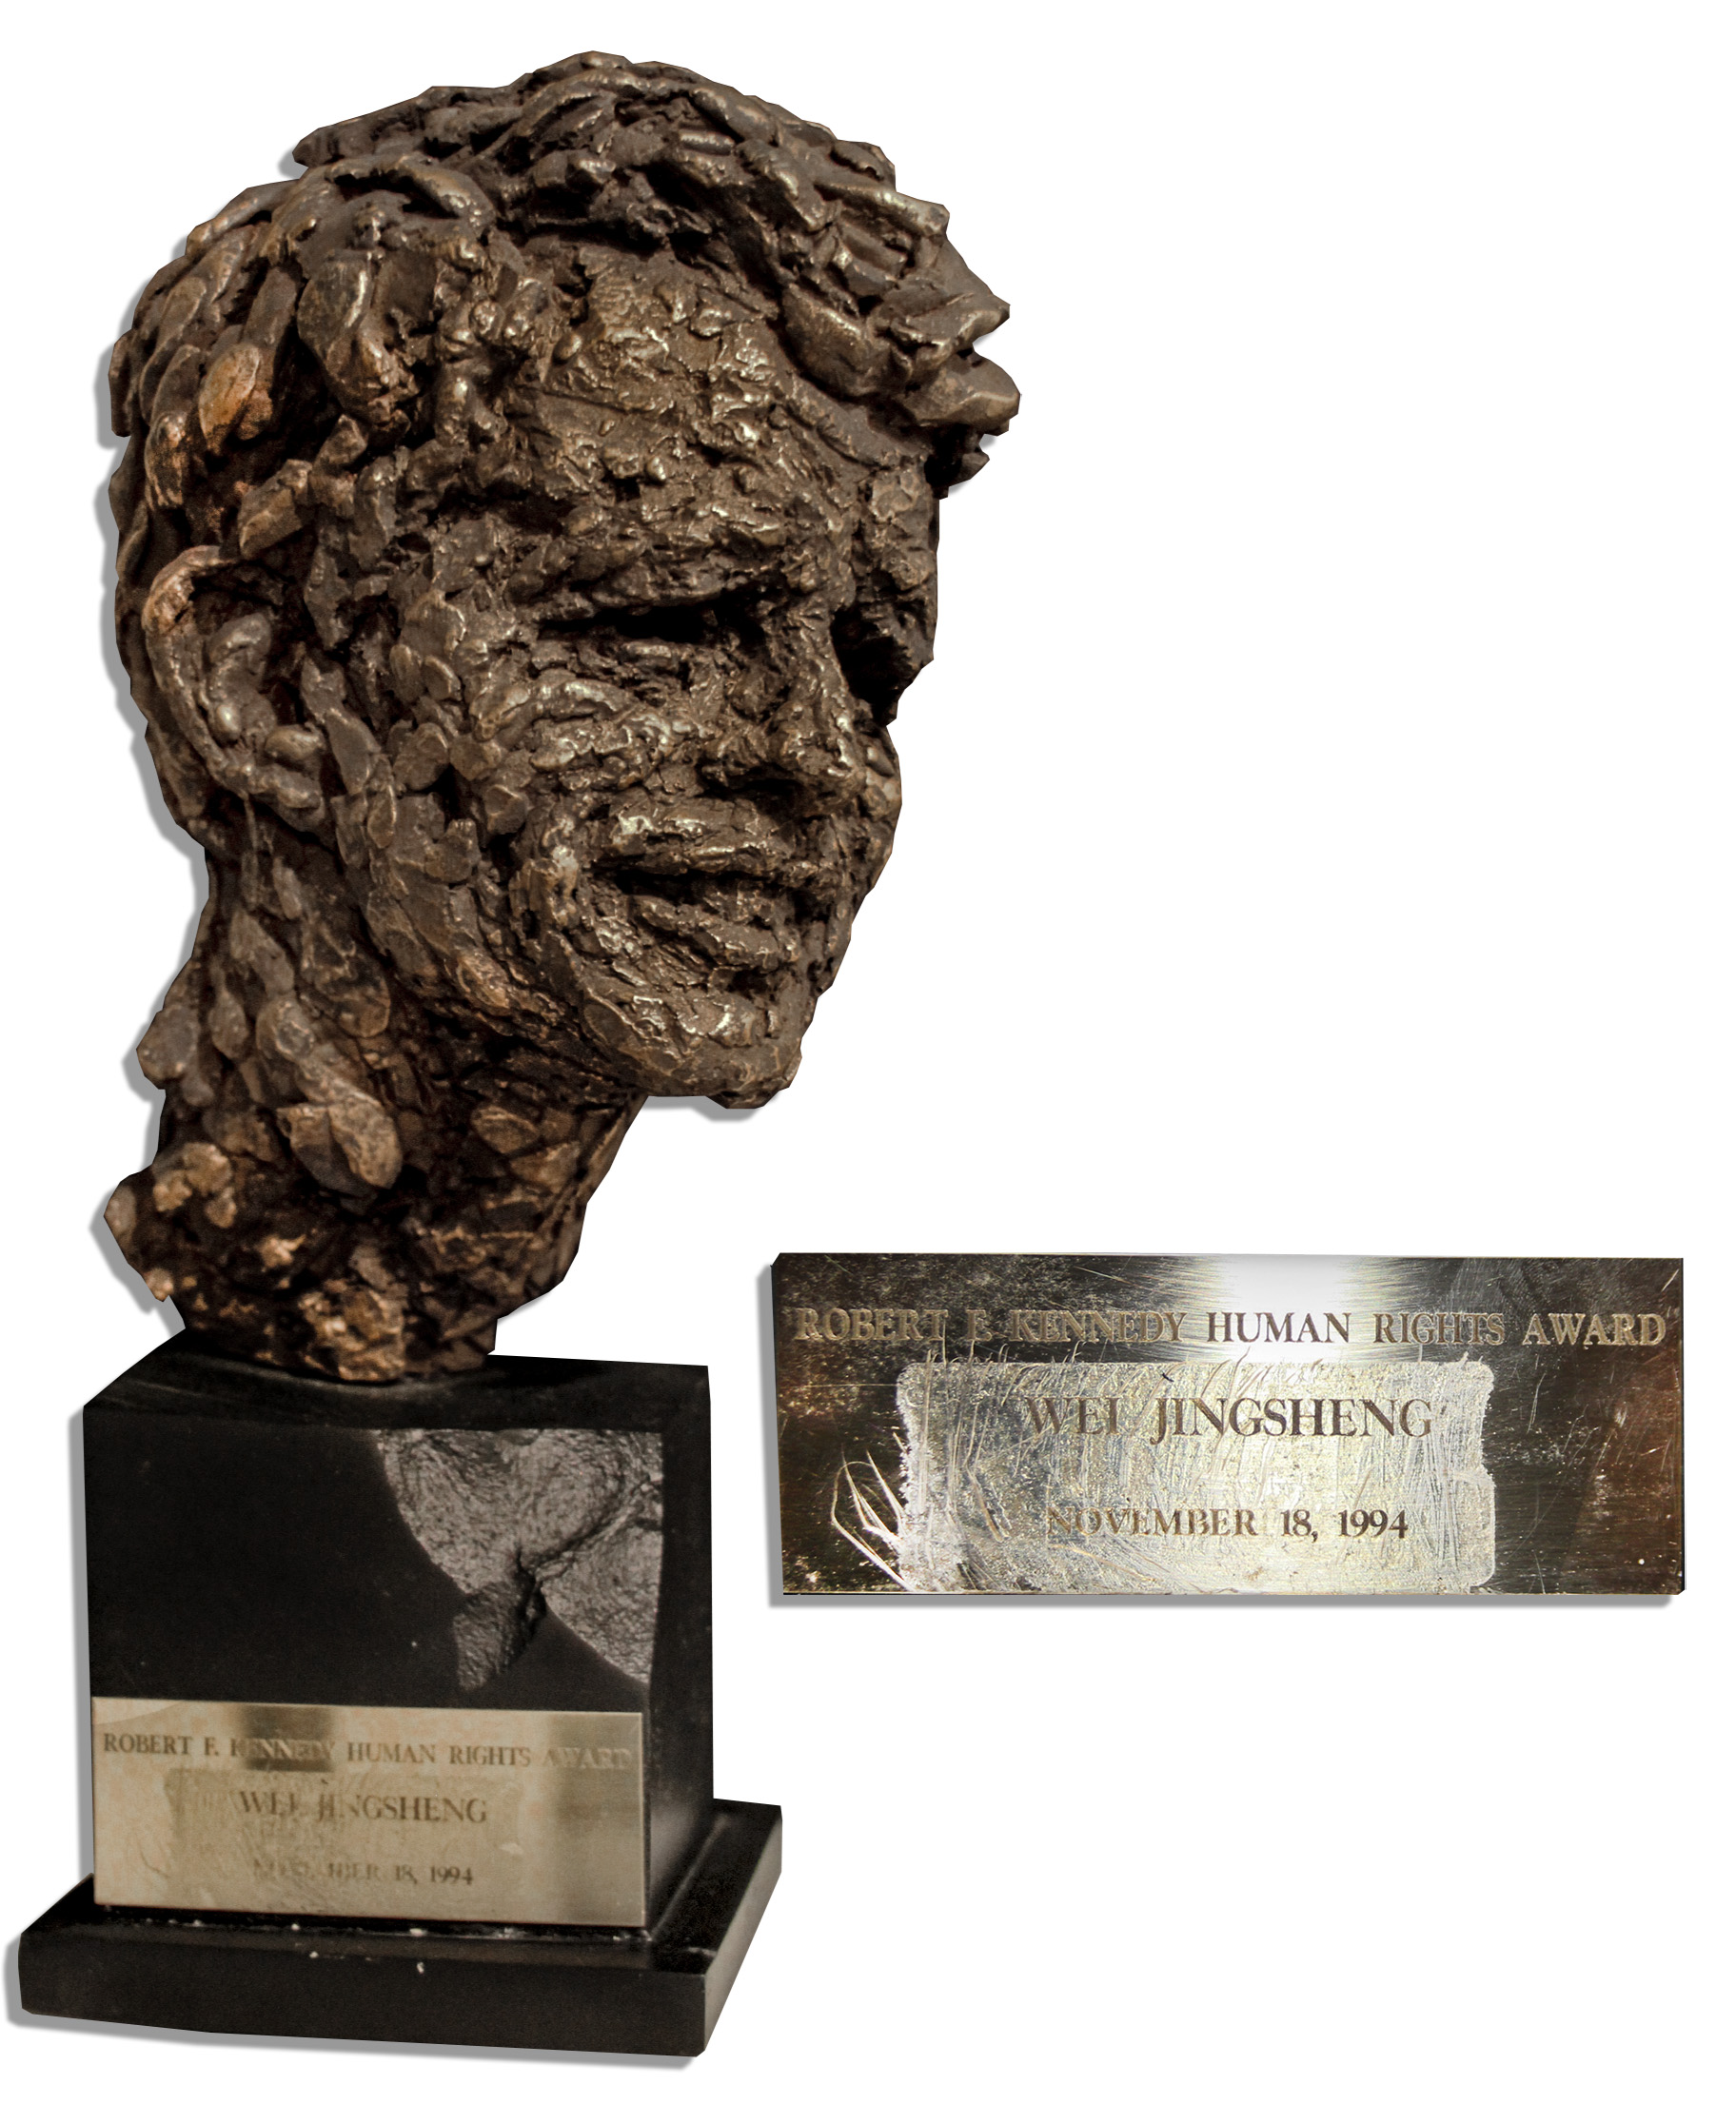 Robert F. Kennedy Human Rights Award